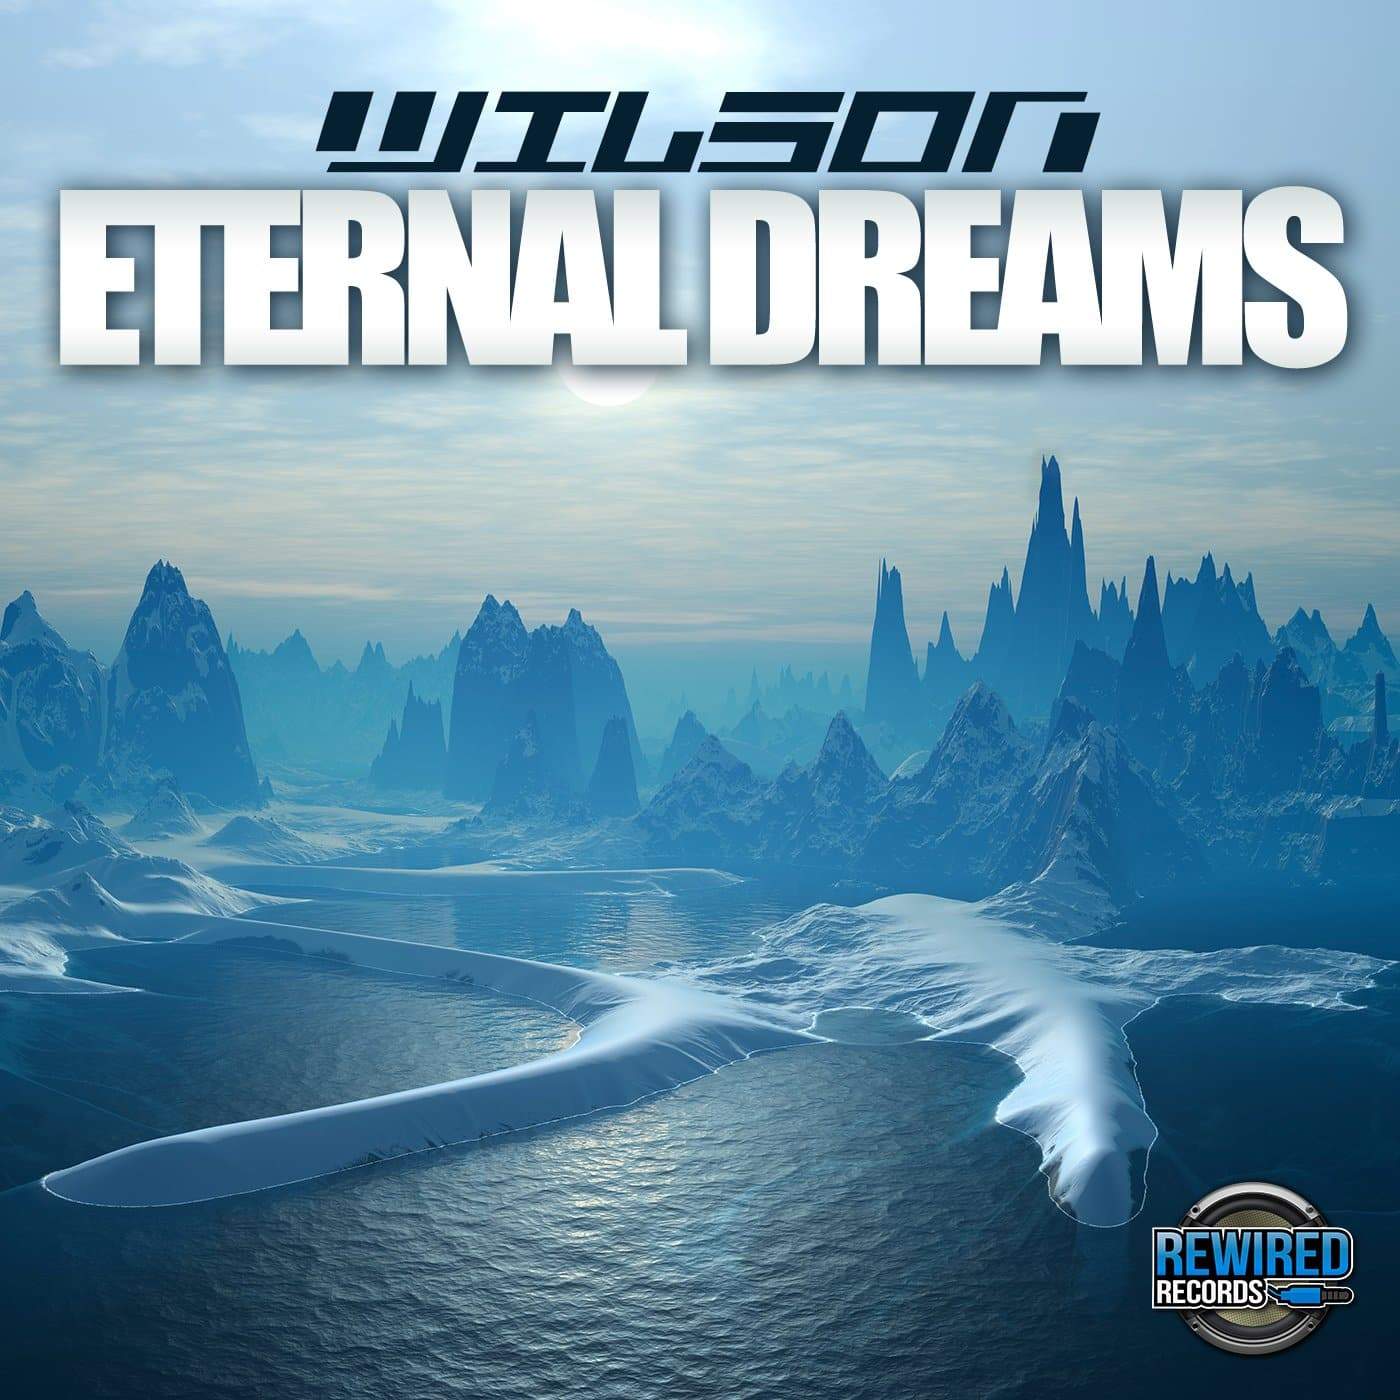 Wilson - Eternal Dreams - Rewired Records